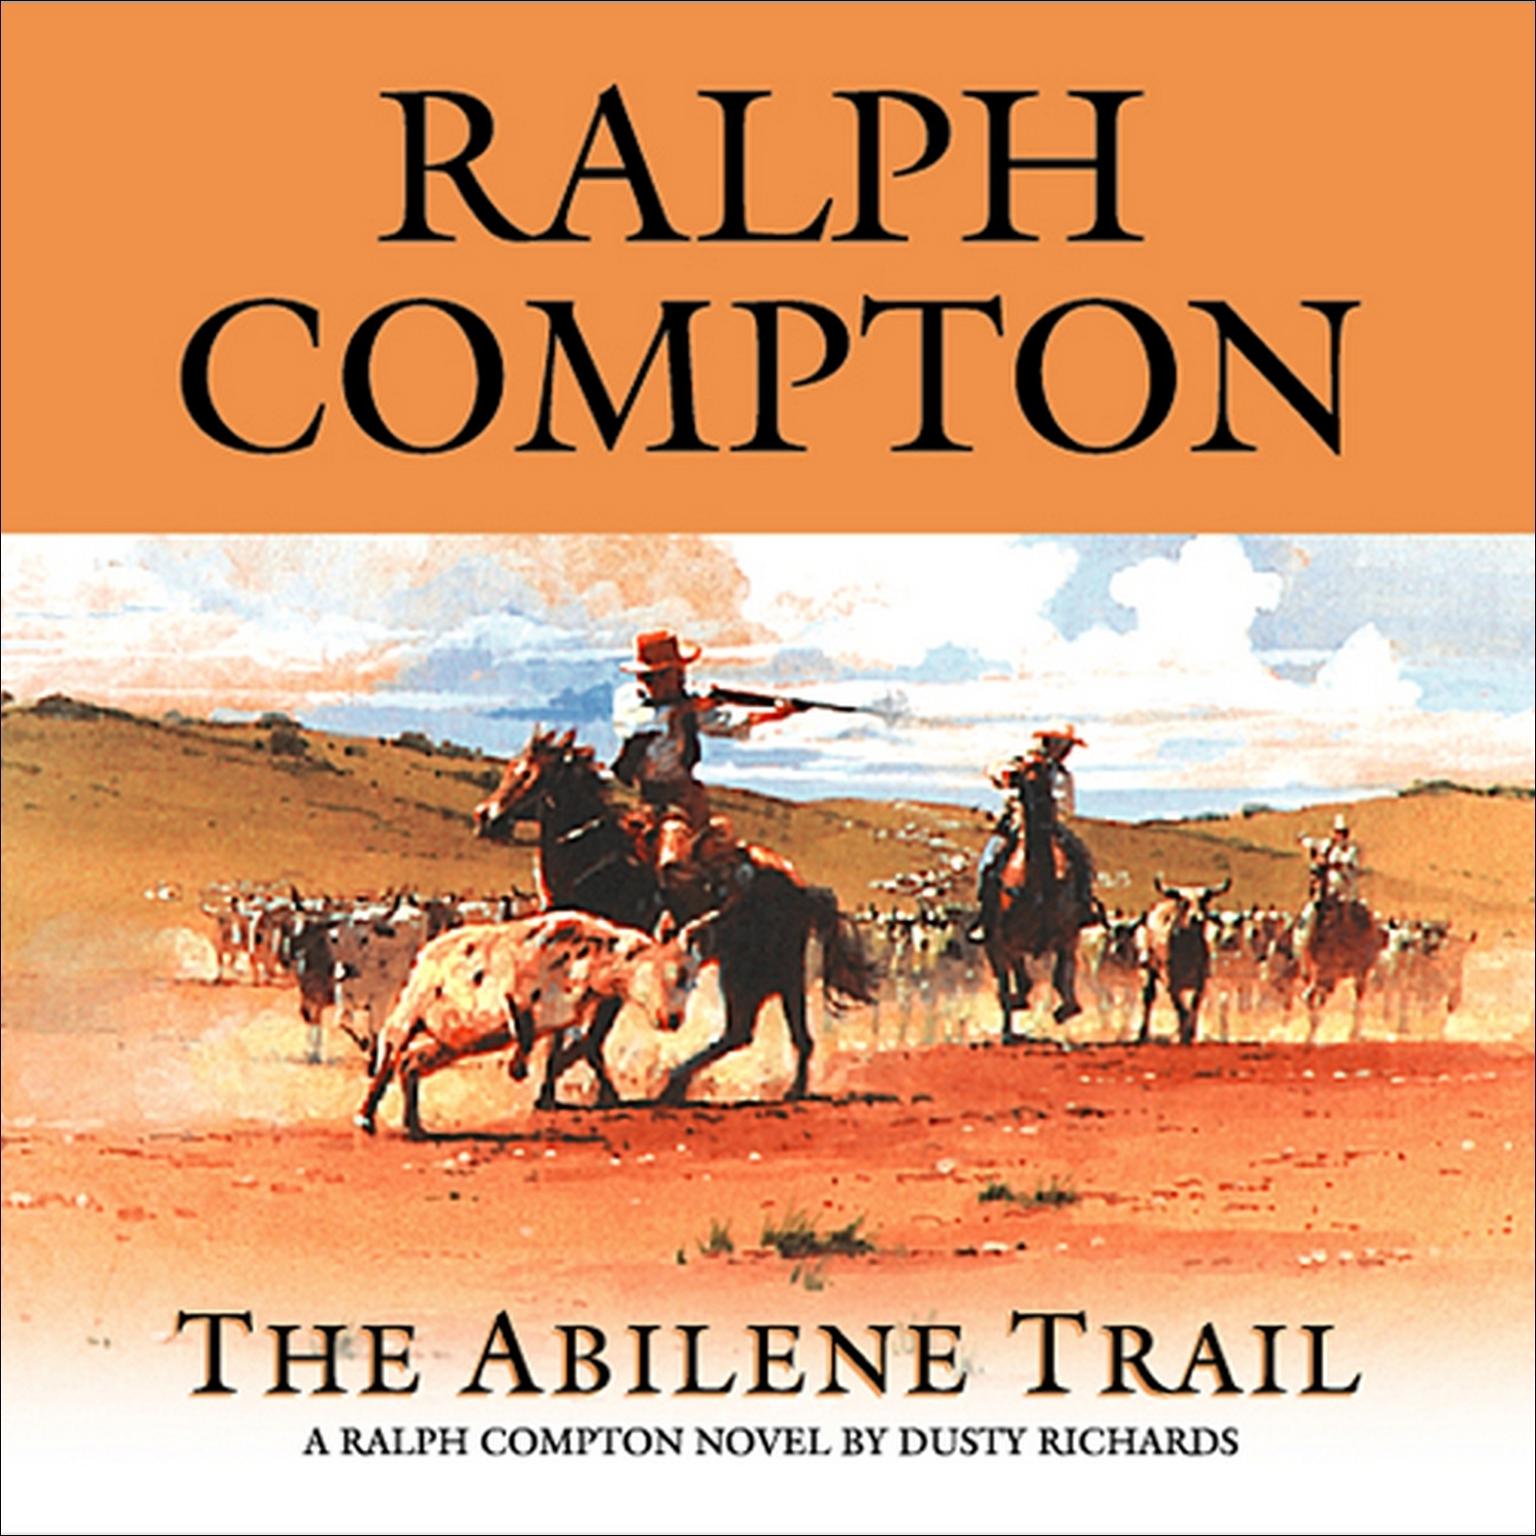 The Abilene Trail (Abridged): A Ralph Compton Novel by Dusty Richards Audiobook, by Ralph Compton